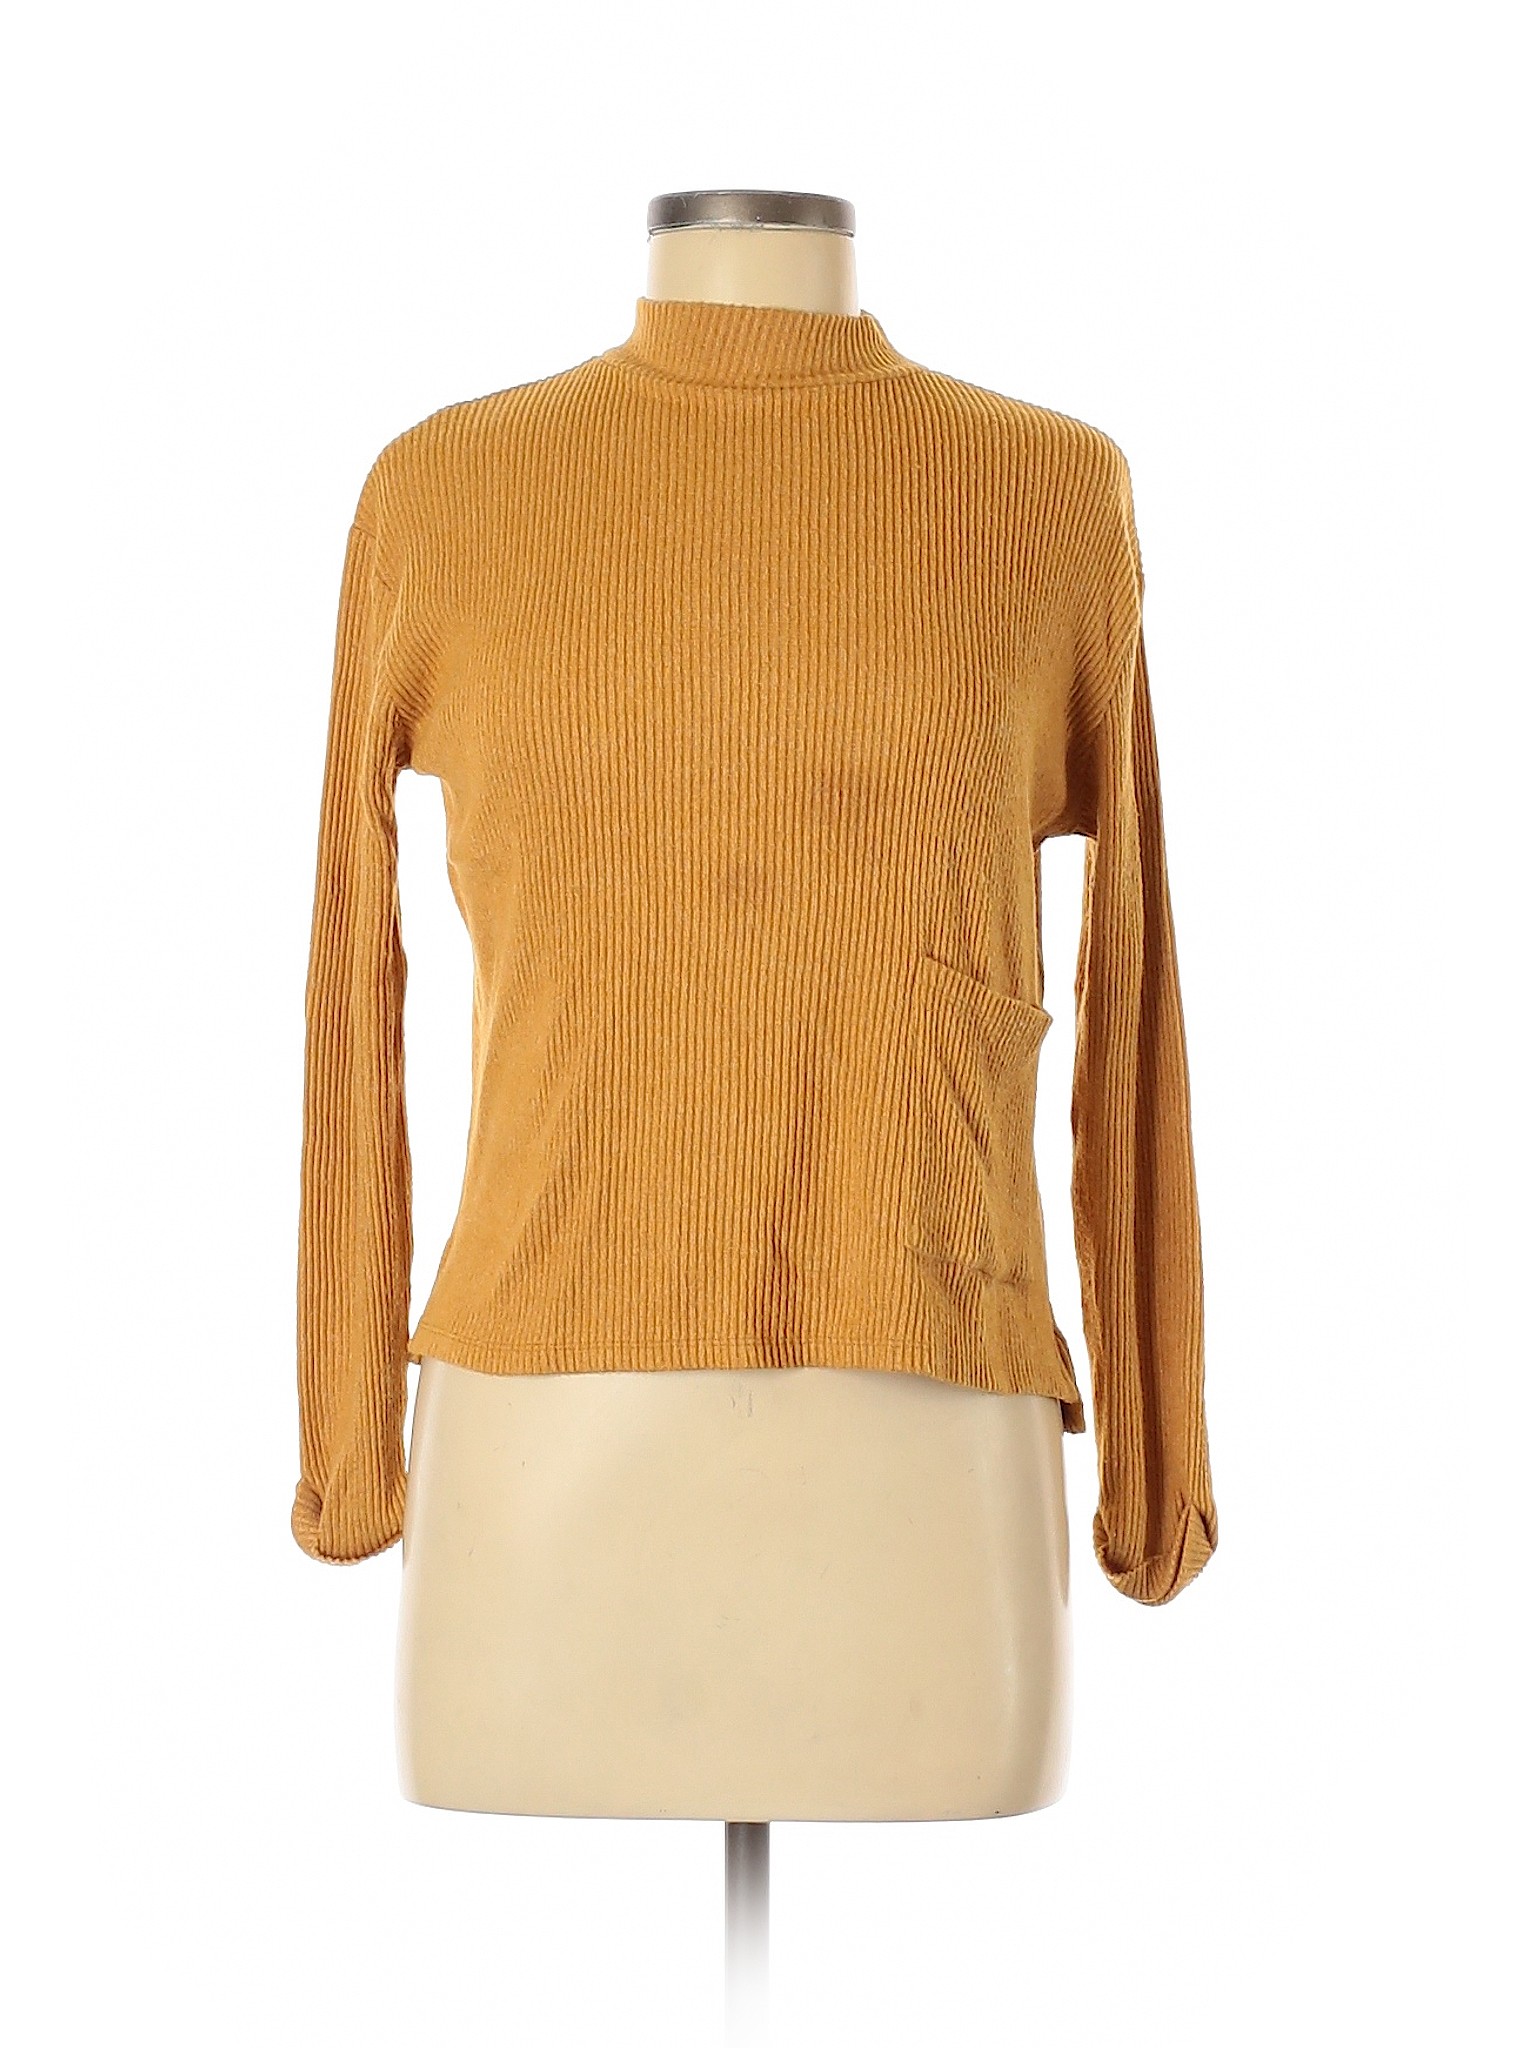  Zara  Women Yellow Long Sleeve T  Shirt  11 eBay